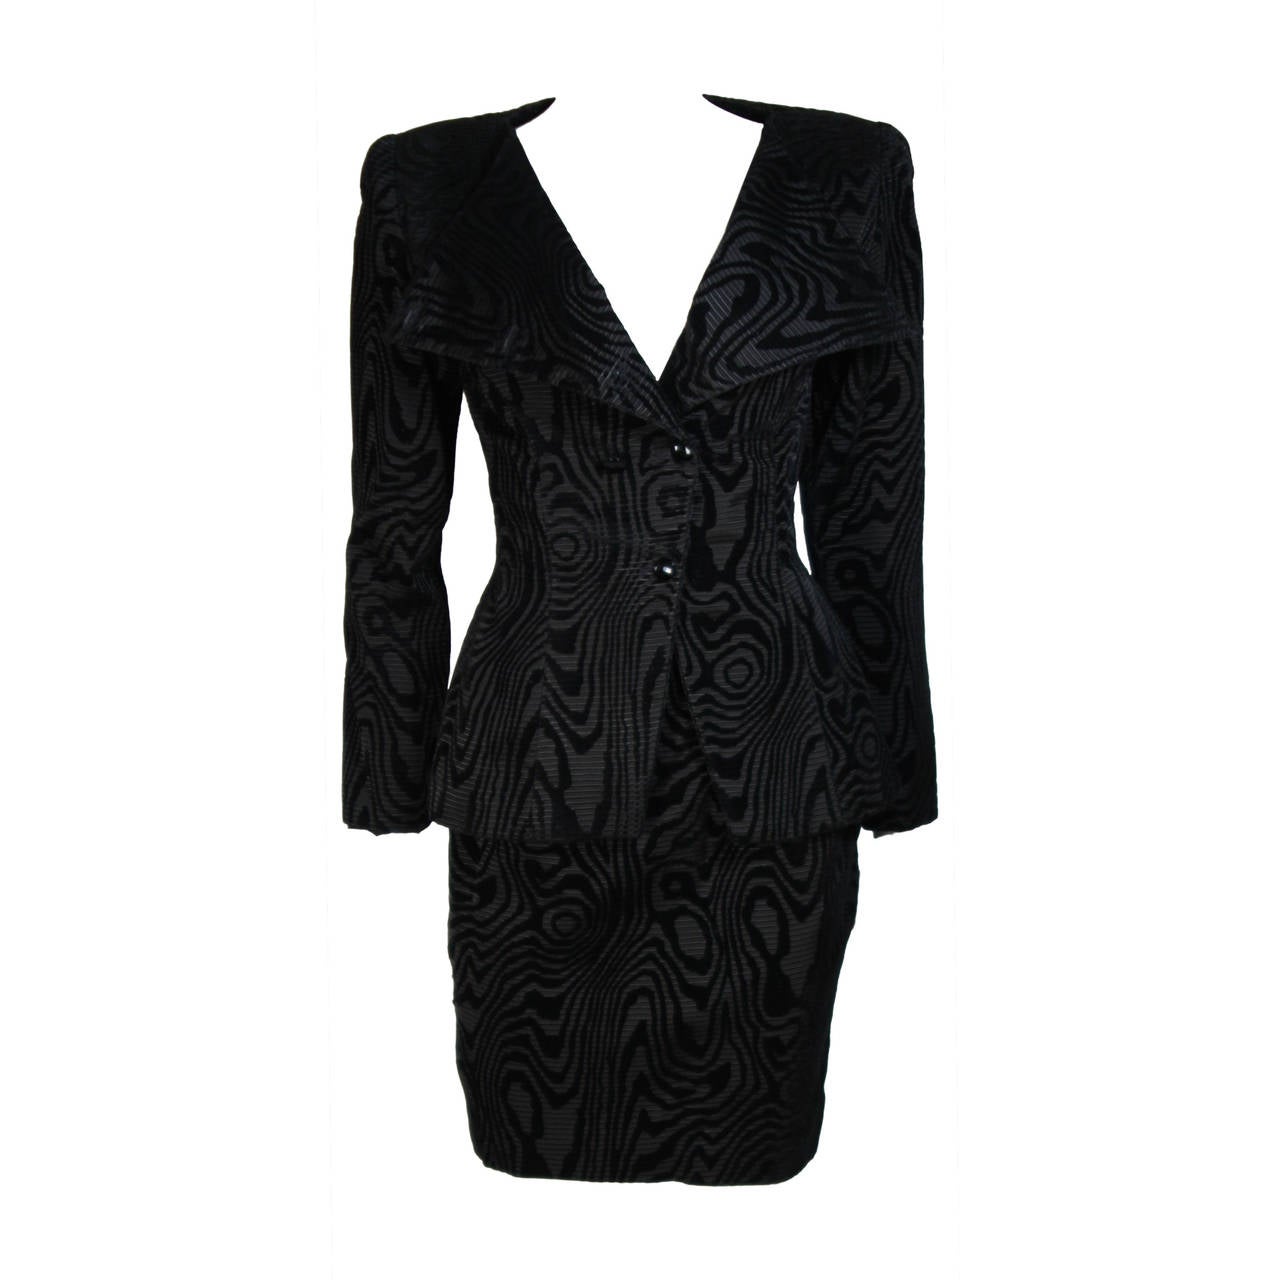 Vicky Tiel Black Silk Skirt Suit with Patterned Velvet Accents Size 38